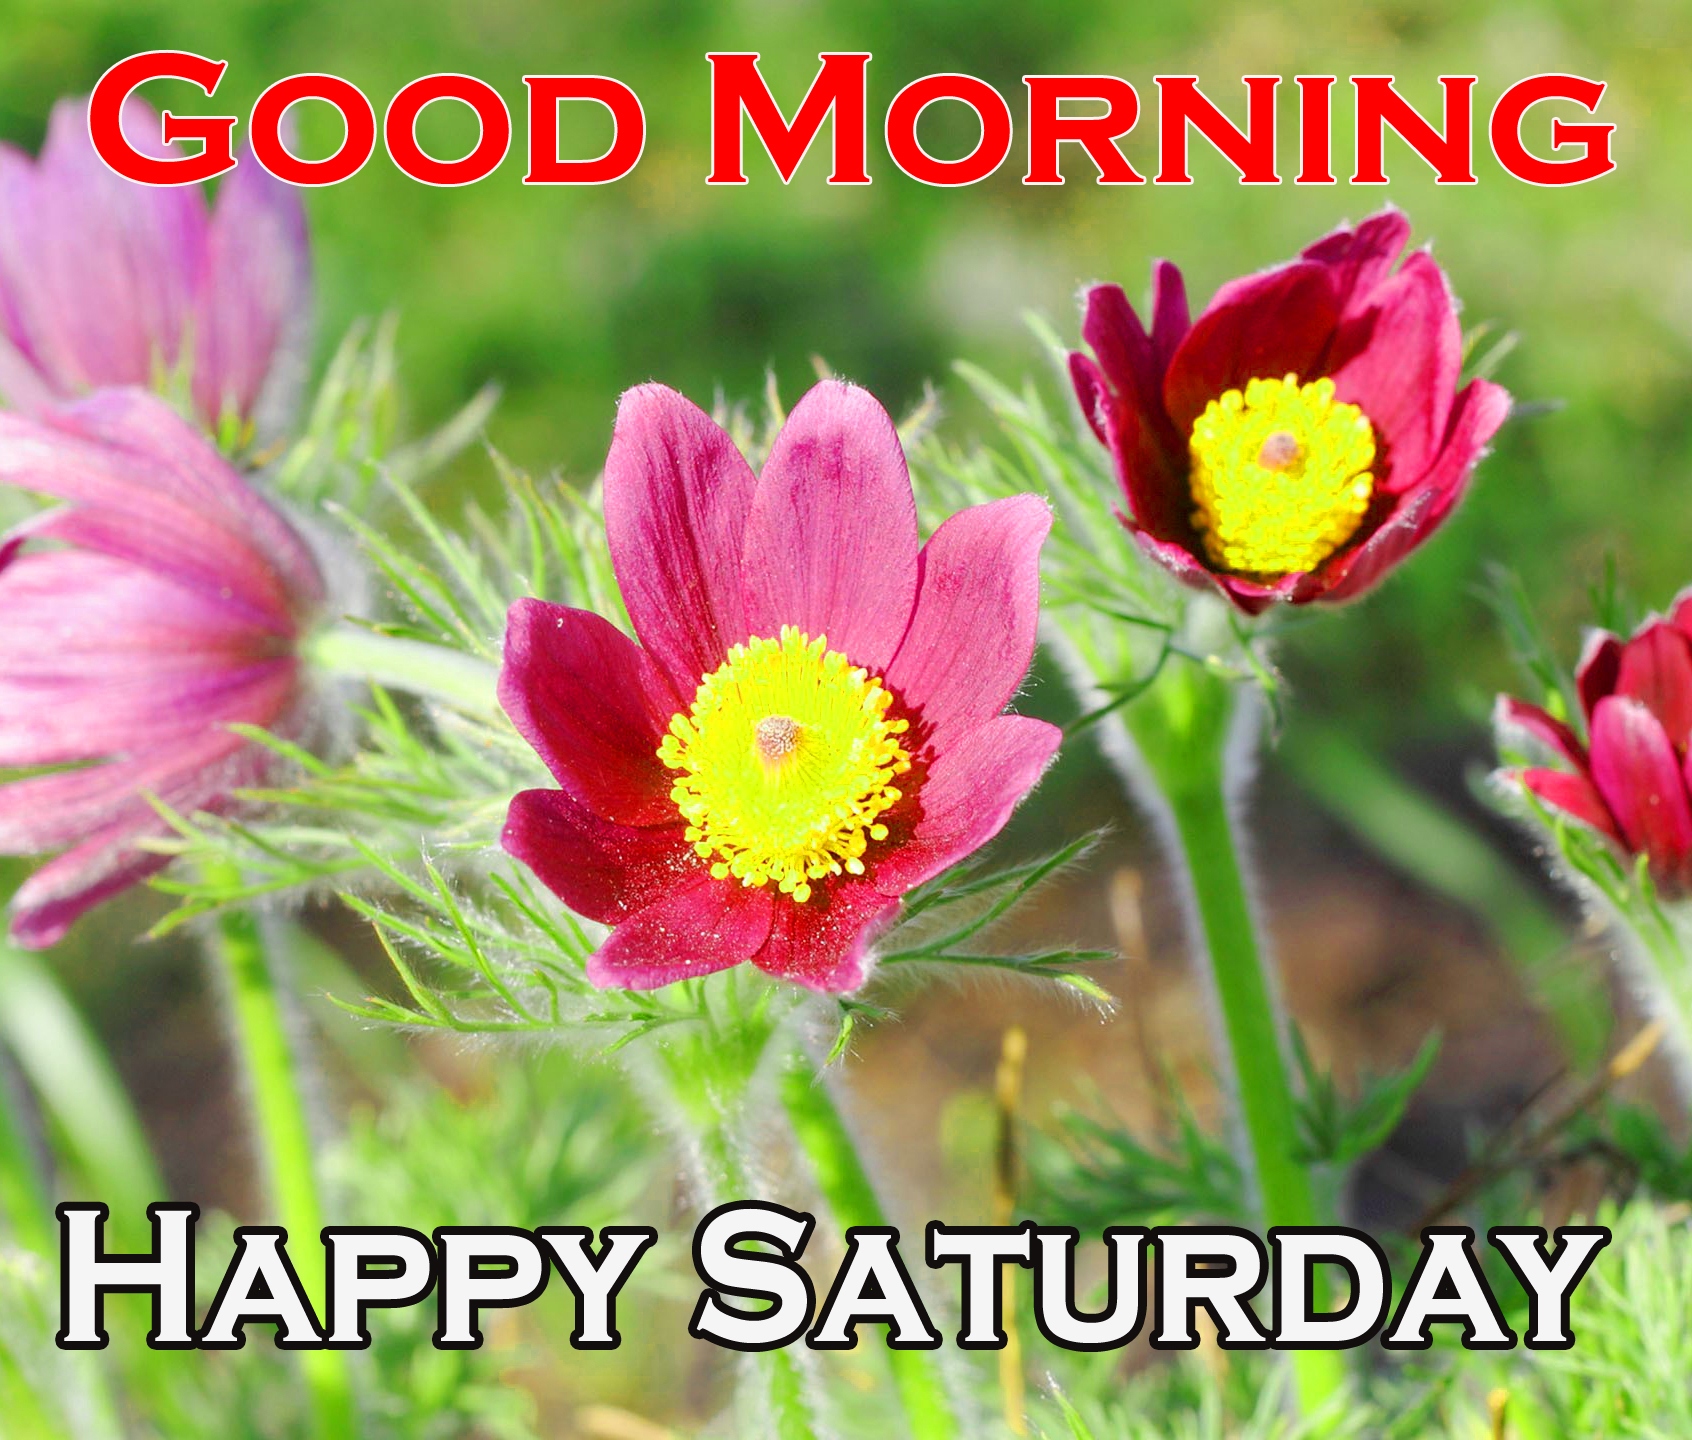 Saturday Good Morning Image Pics Download